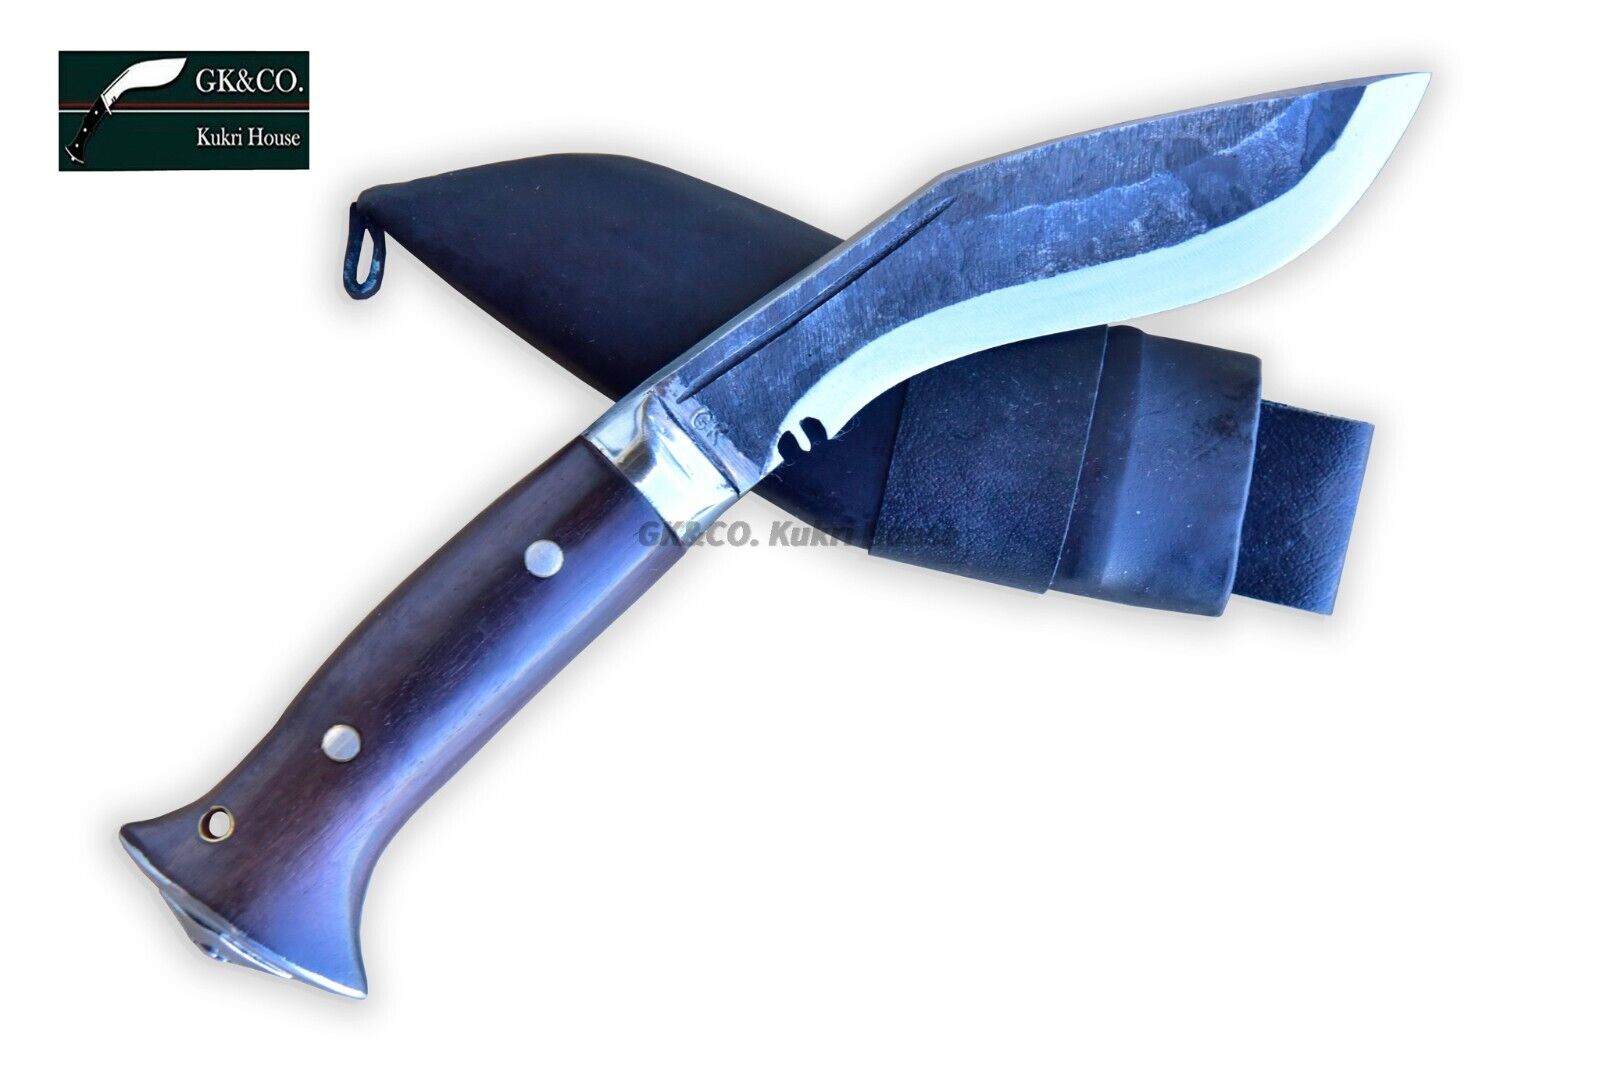 Genuine Gurkha Kukri-5 Inches Black Blade,Panawal Khukuri-Handmade(Packet knife)